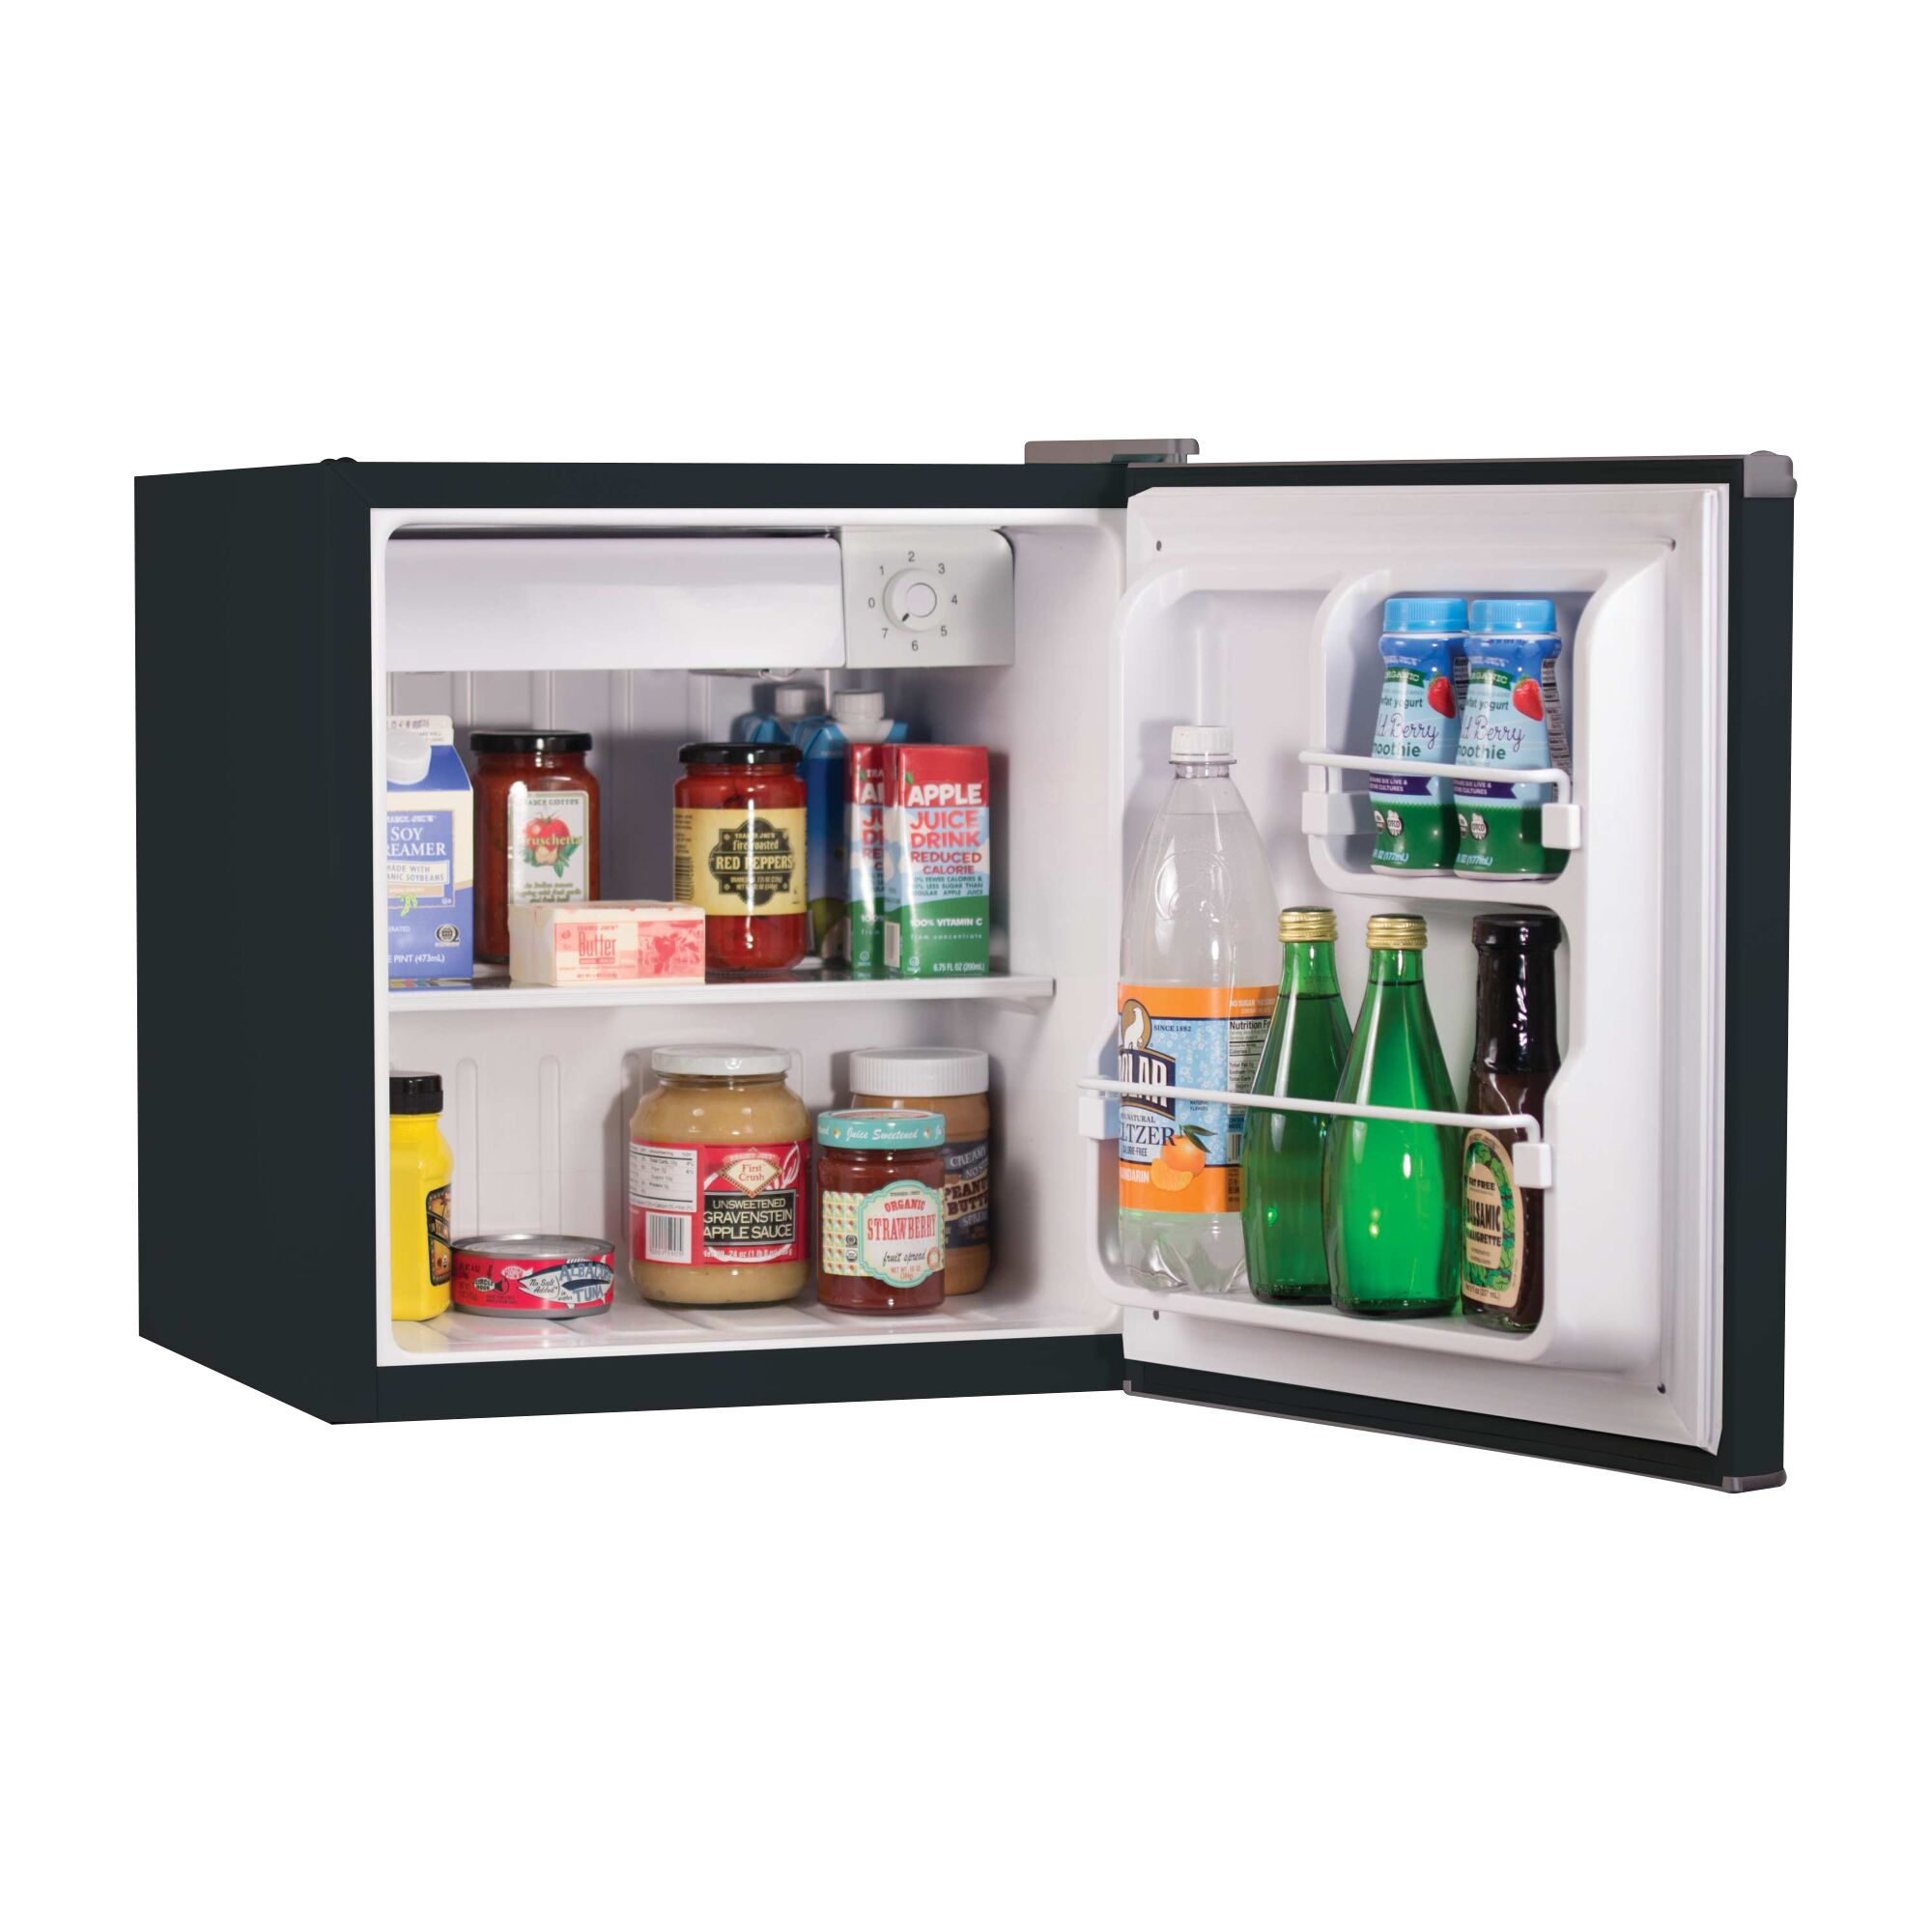 Energy star refrigerator with freezer black.